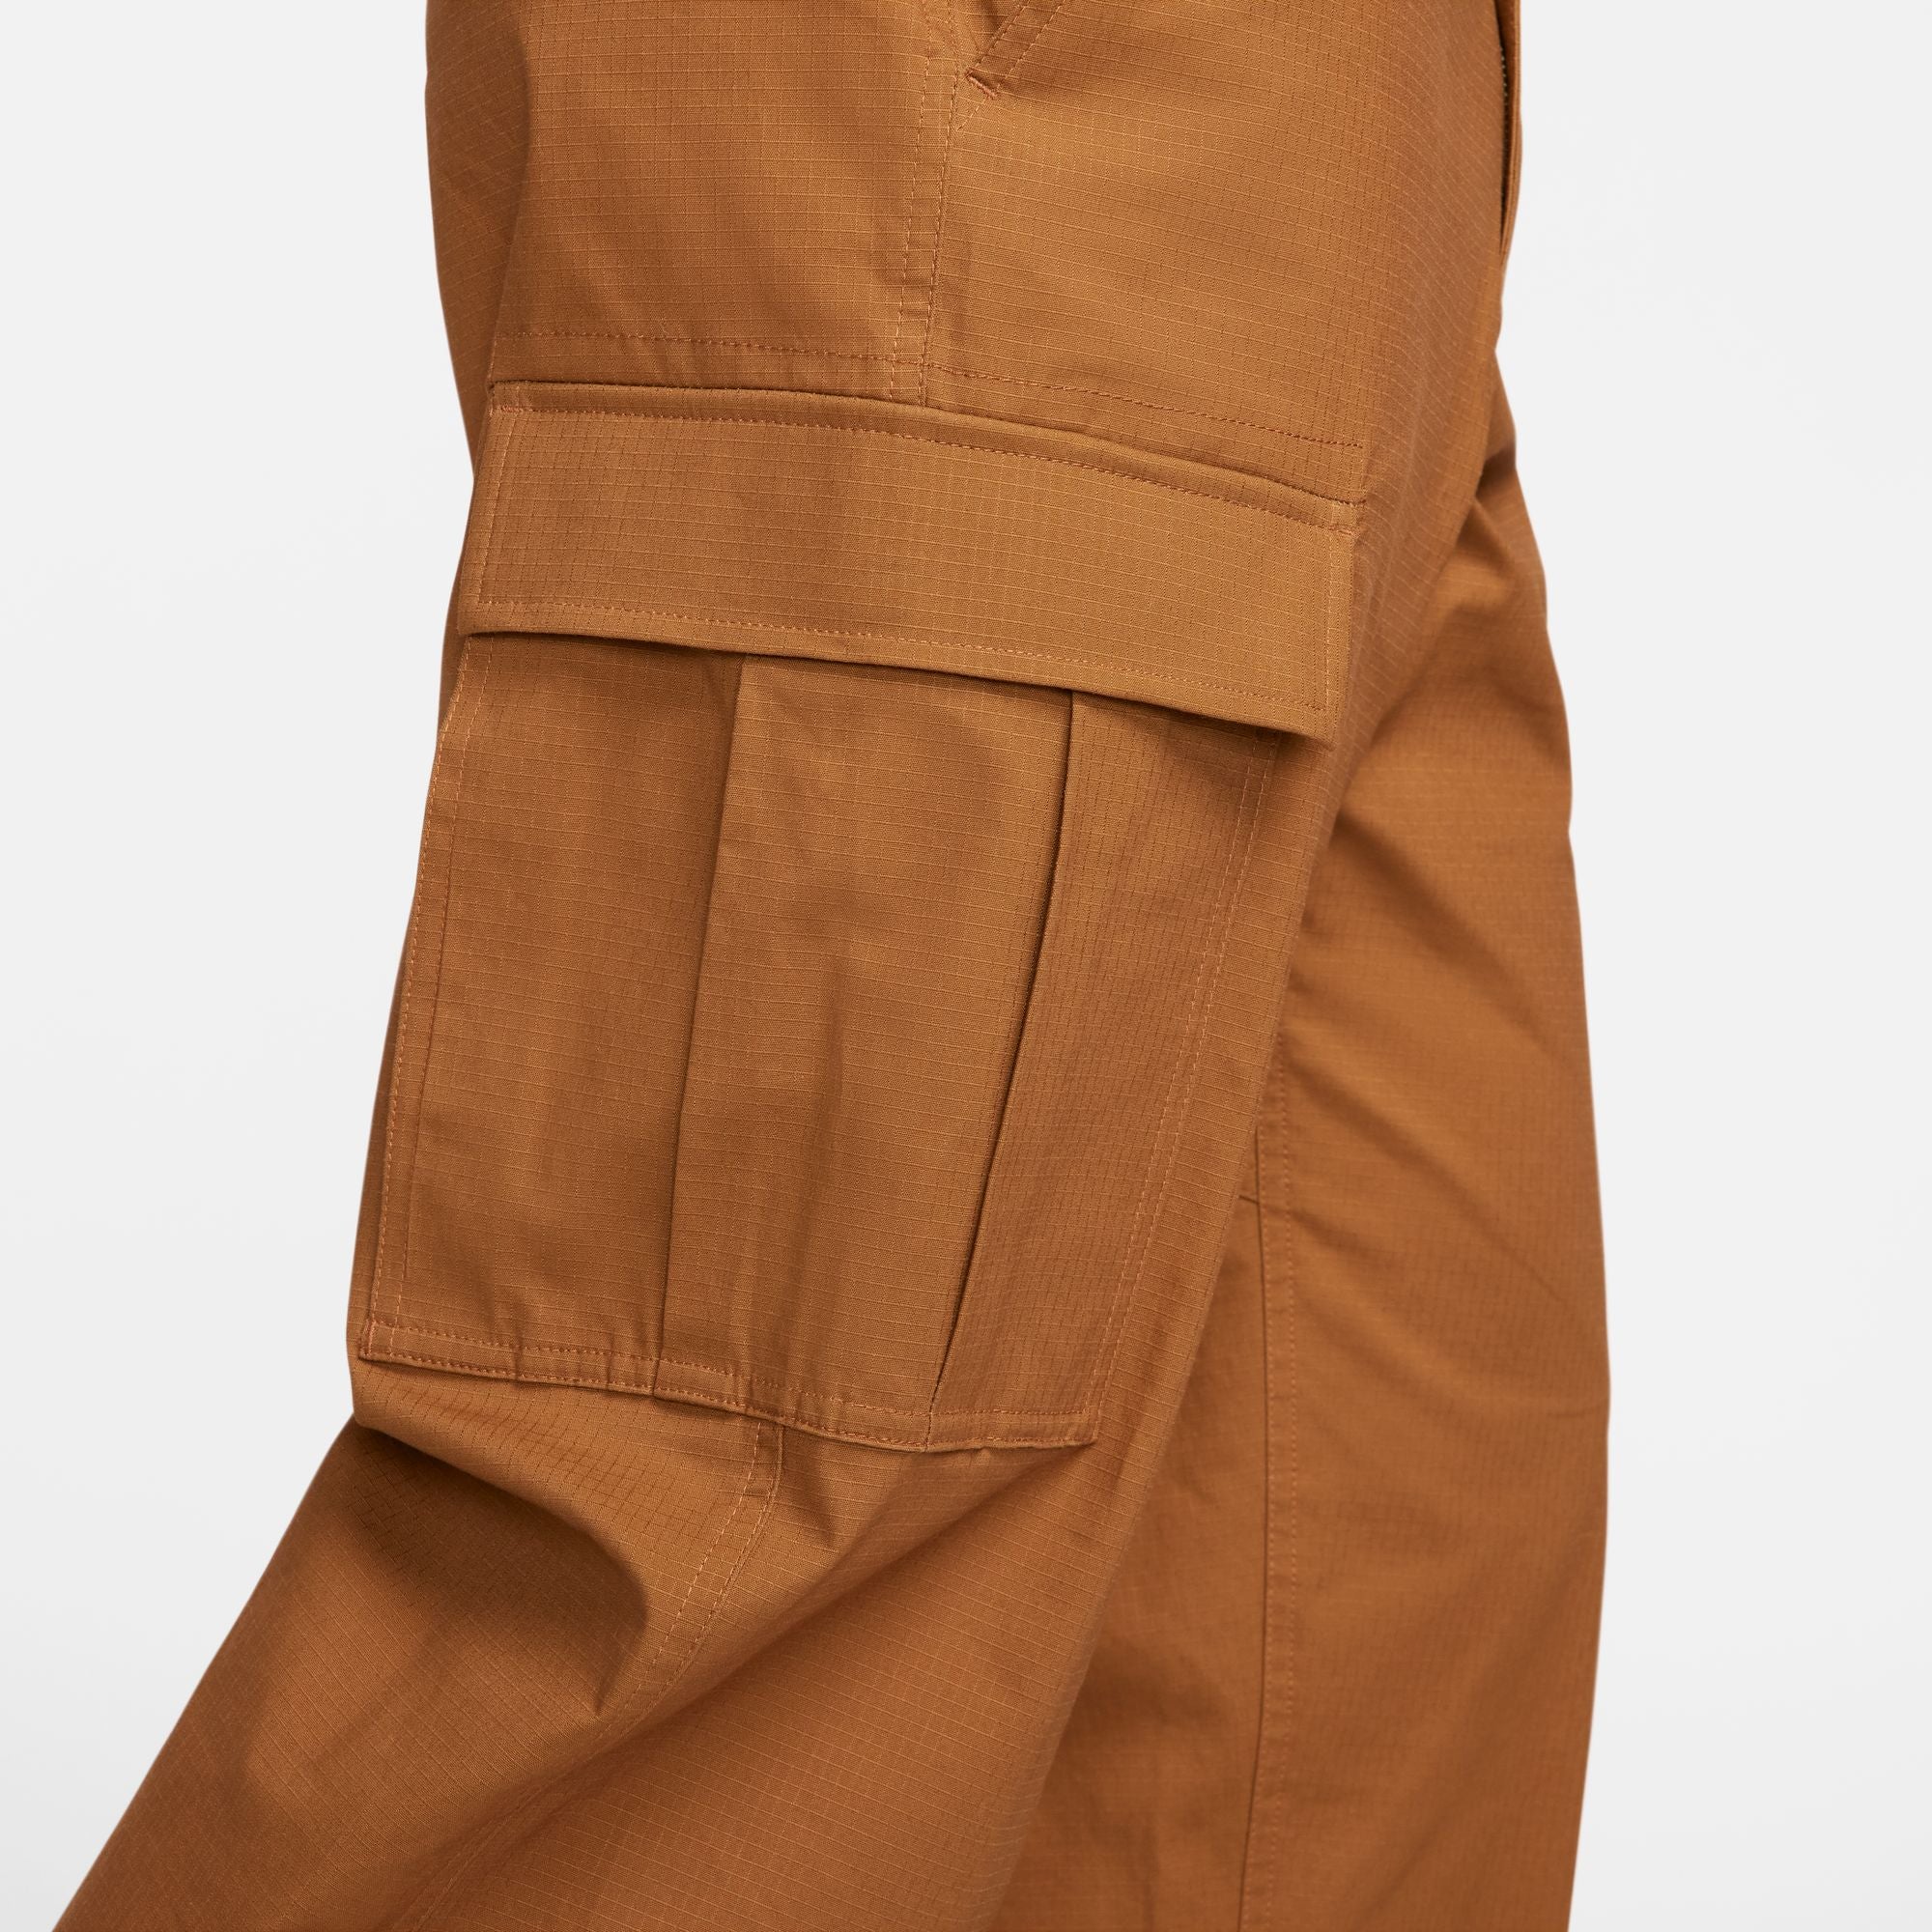 Nike SB Kearny Cargo Pants - Light Tan